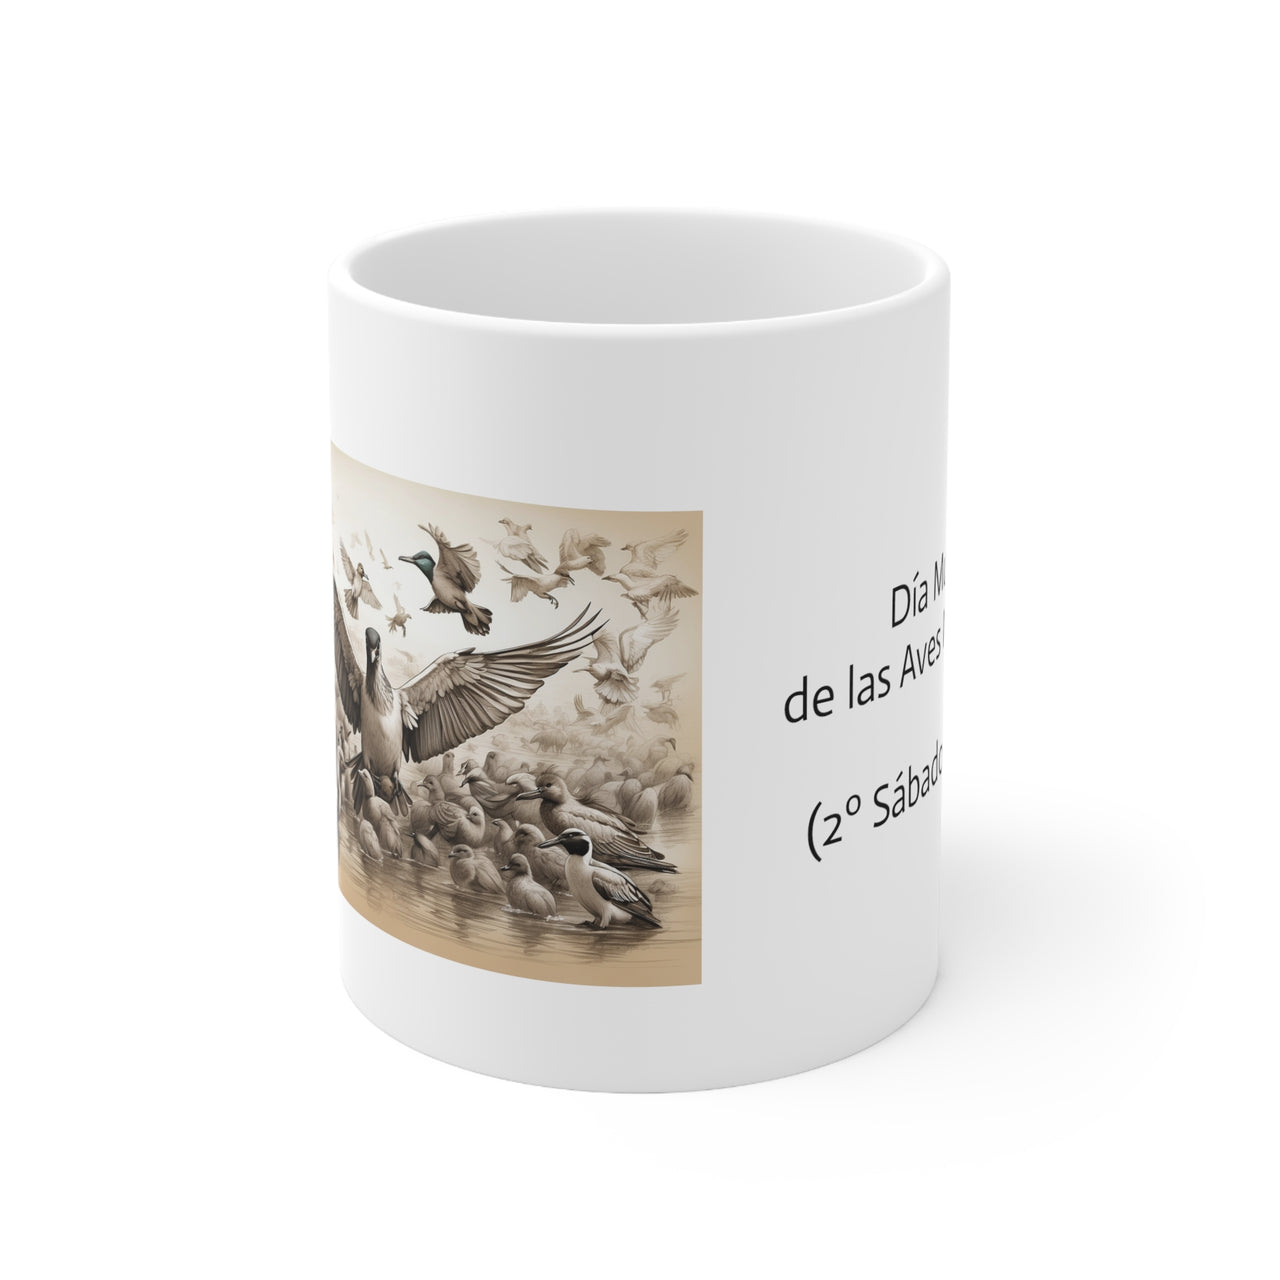 Taza Día Mundial de las Aves Migratorias Nº2, Taza reivindicativa, Taza de café con aves, 0.33 l, 0.44 l